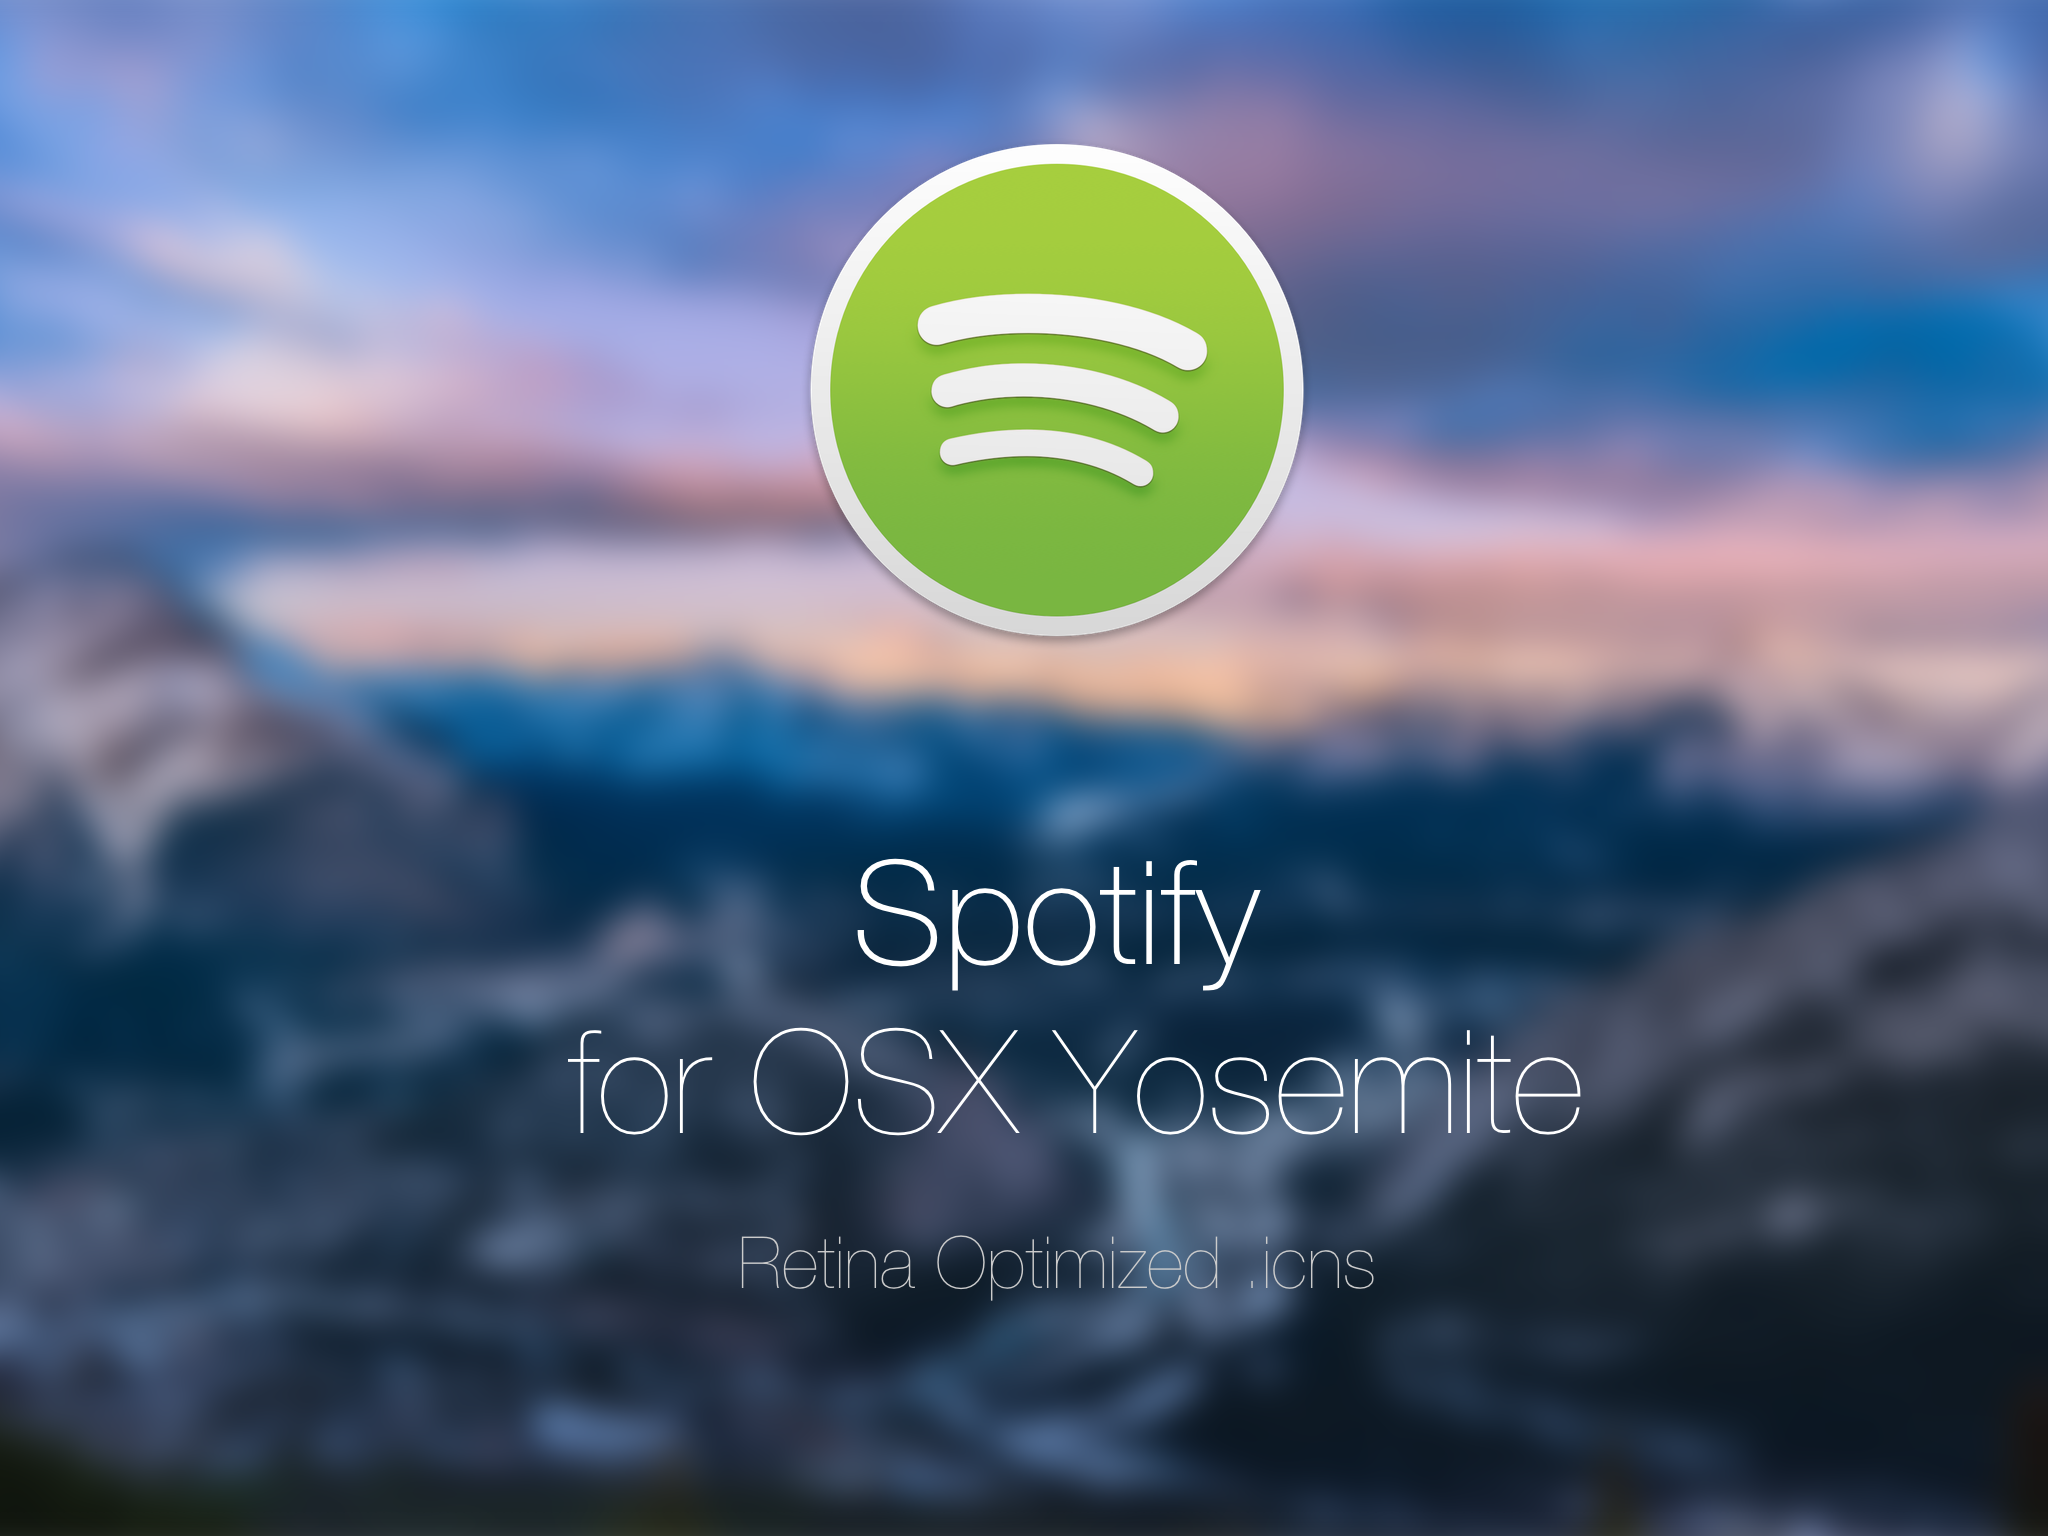 Spotify for OSX Yosemite - Retina